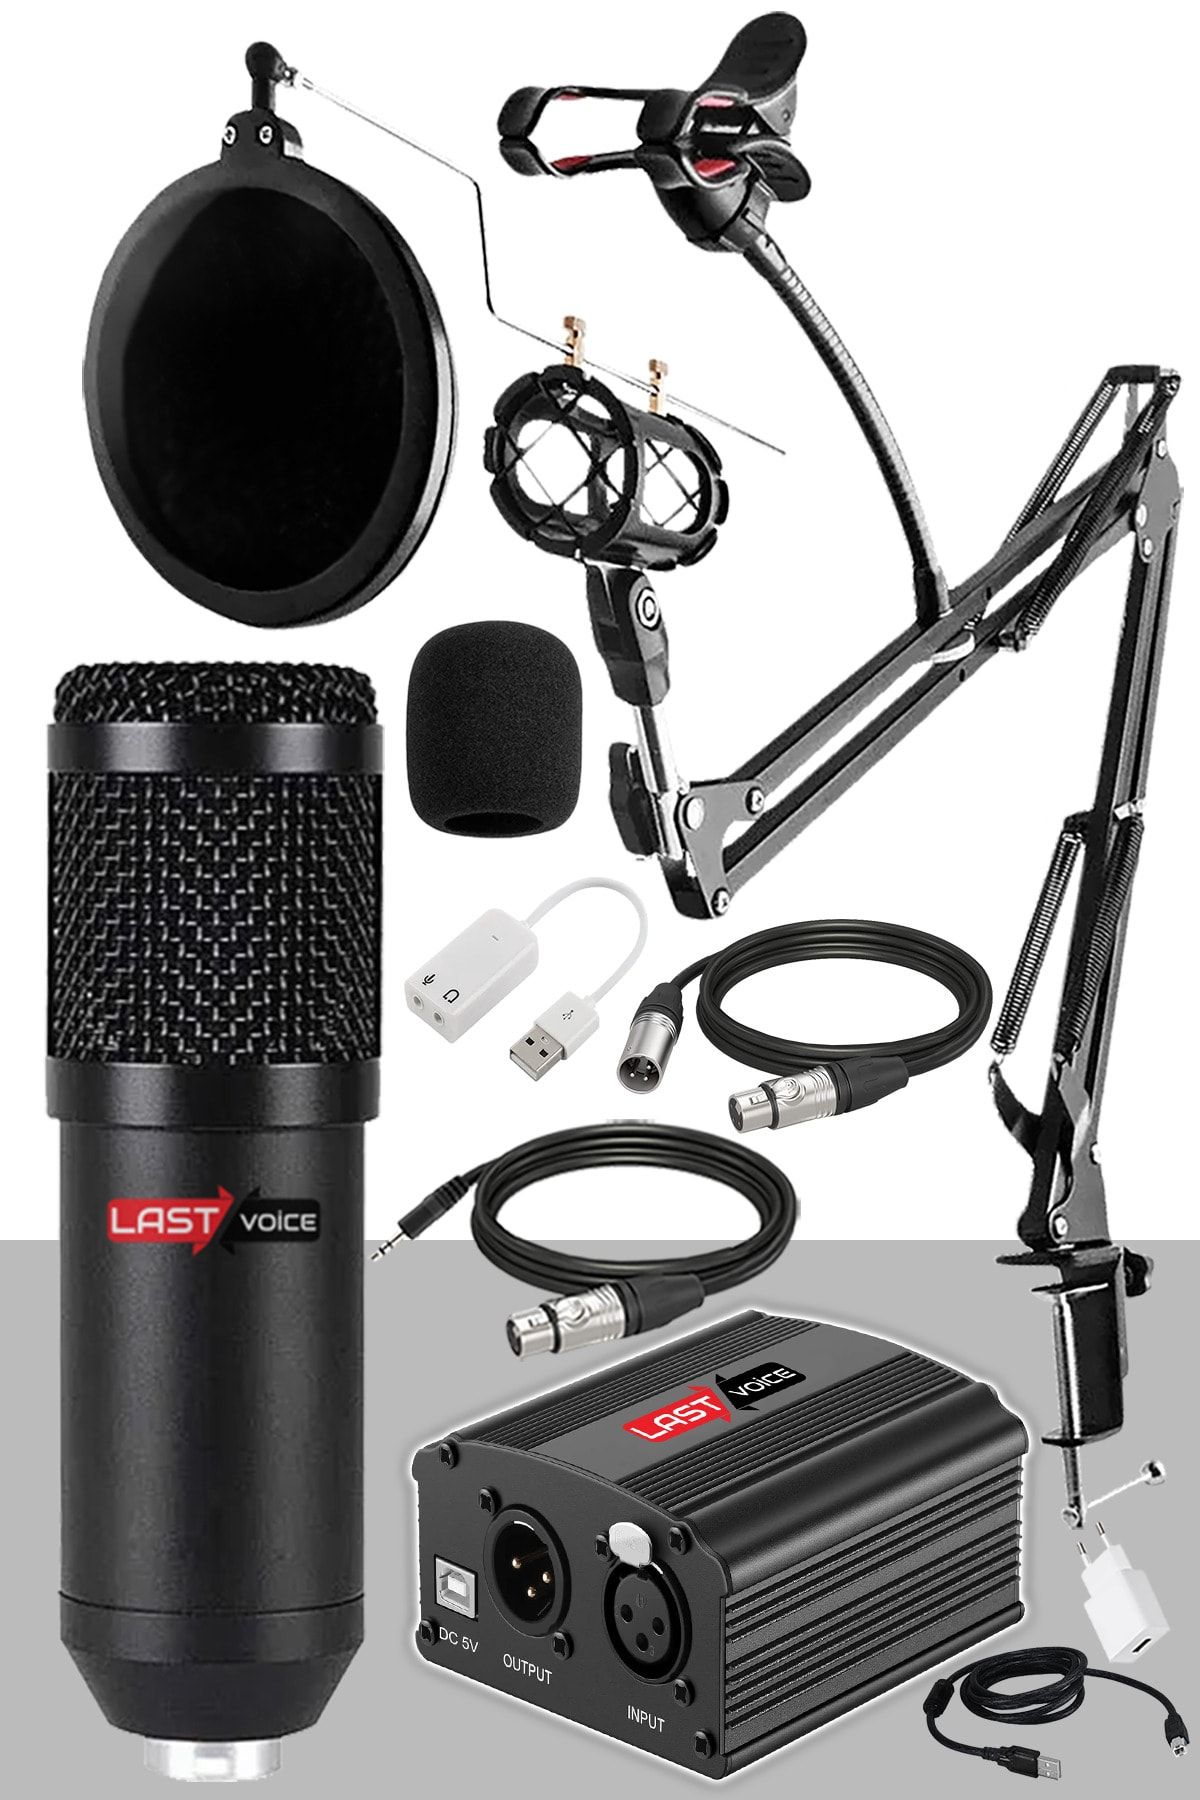 Lastvoice Home Paket Bm800 Mikrofon + Set-01 Stand + Phantom Power